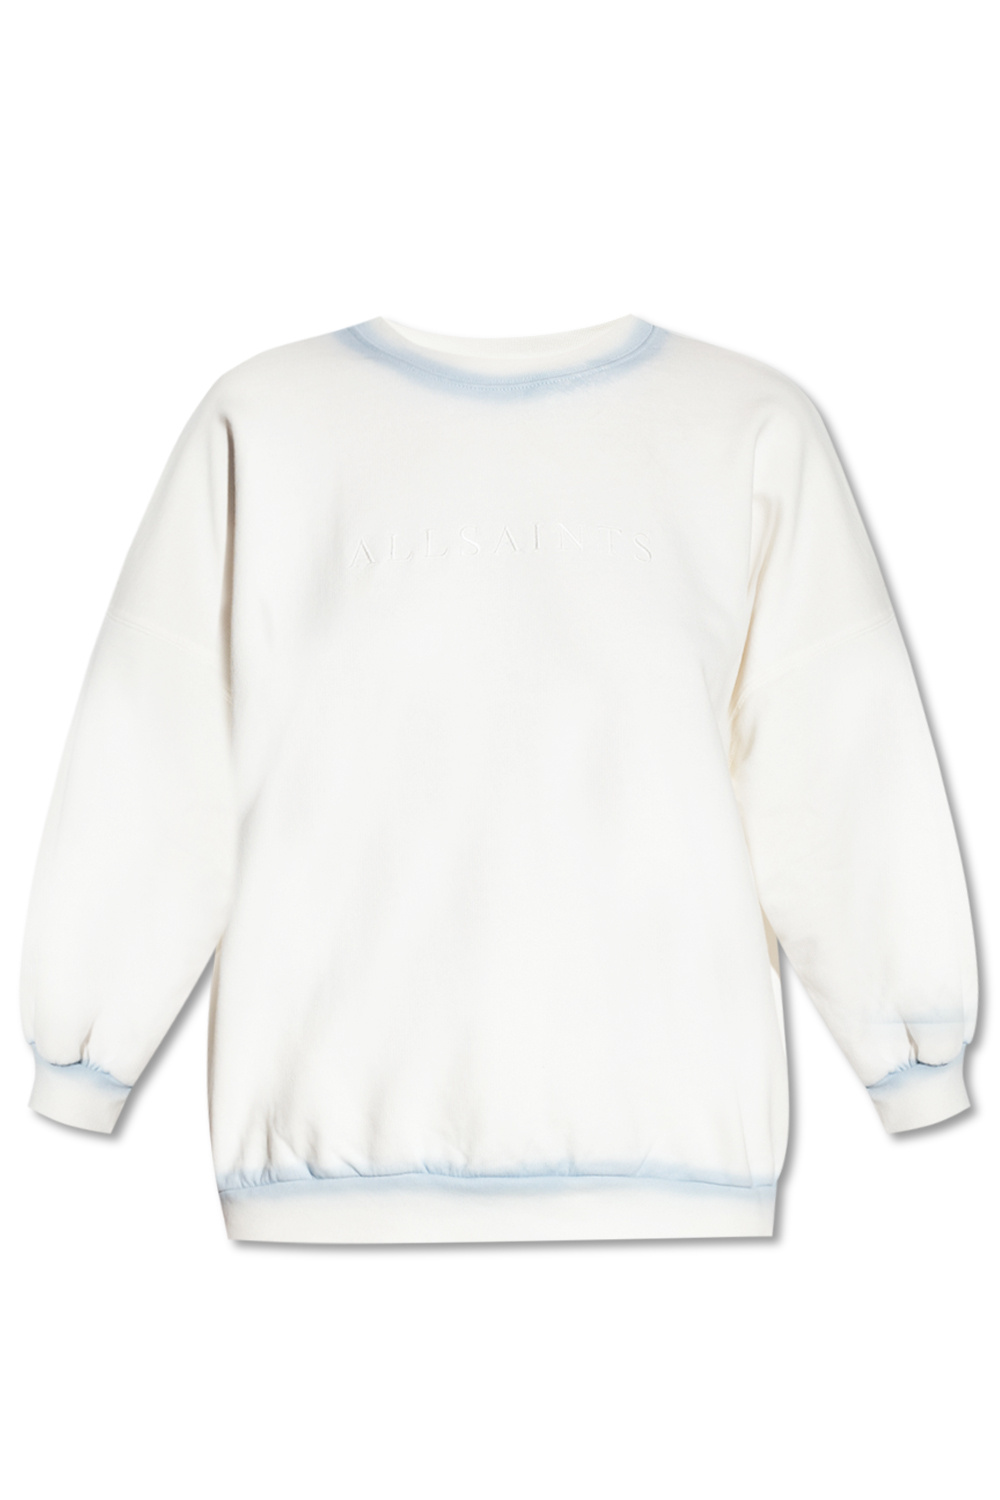 AllSaints ‘Spray’ sweatshirt